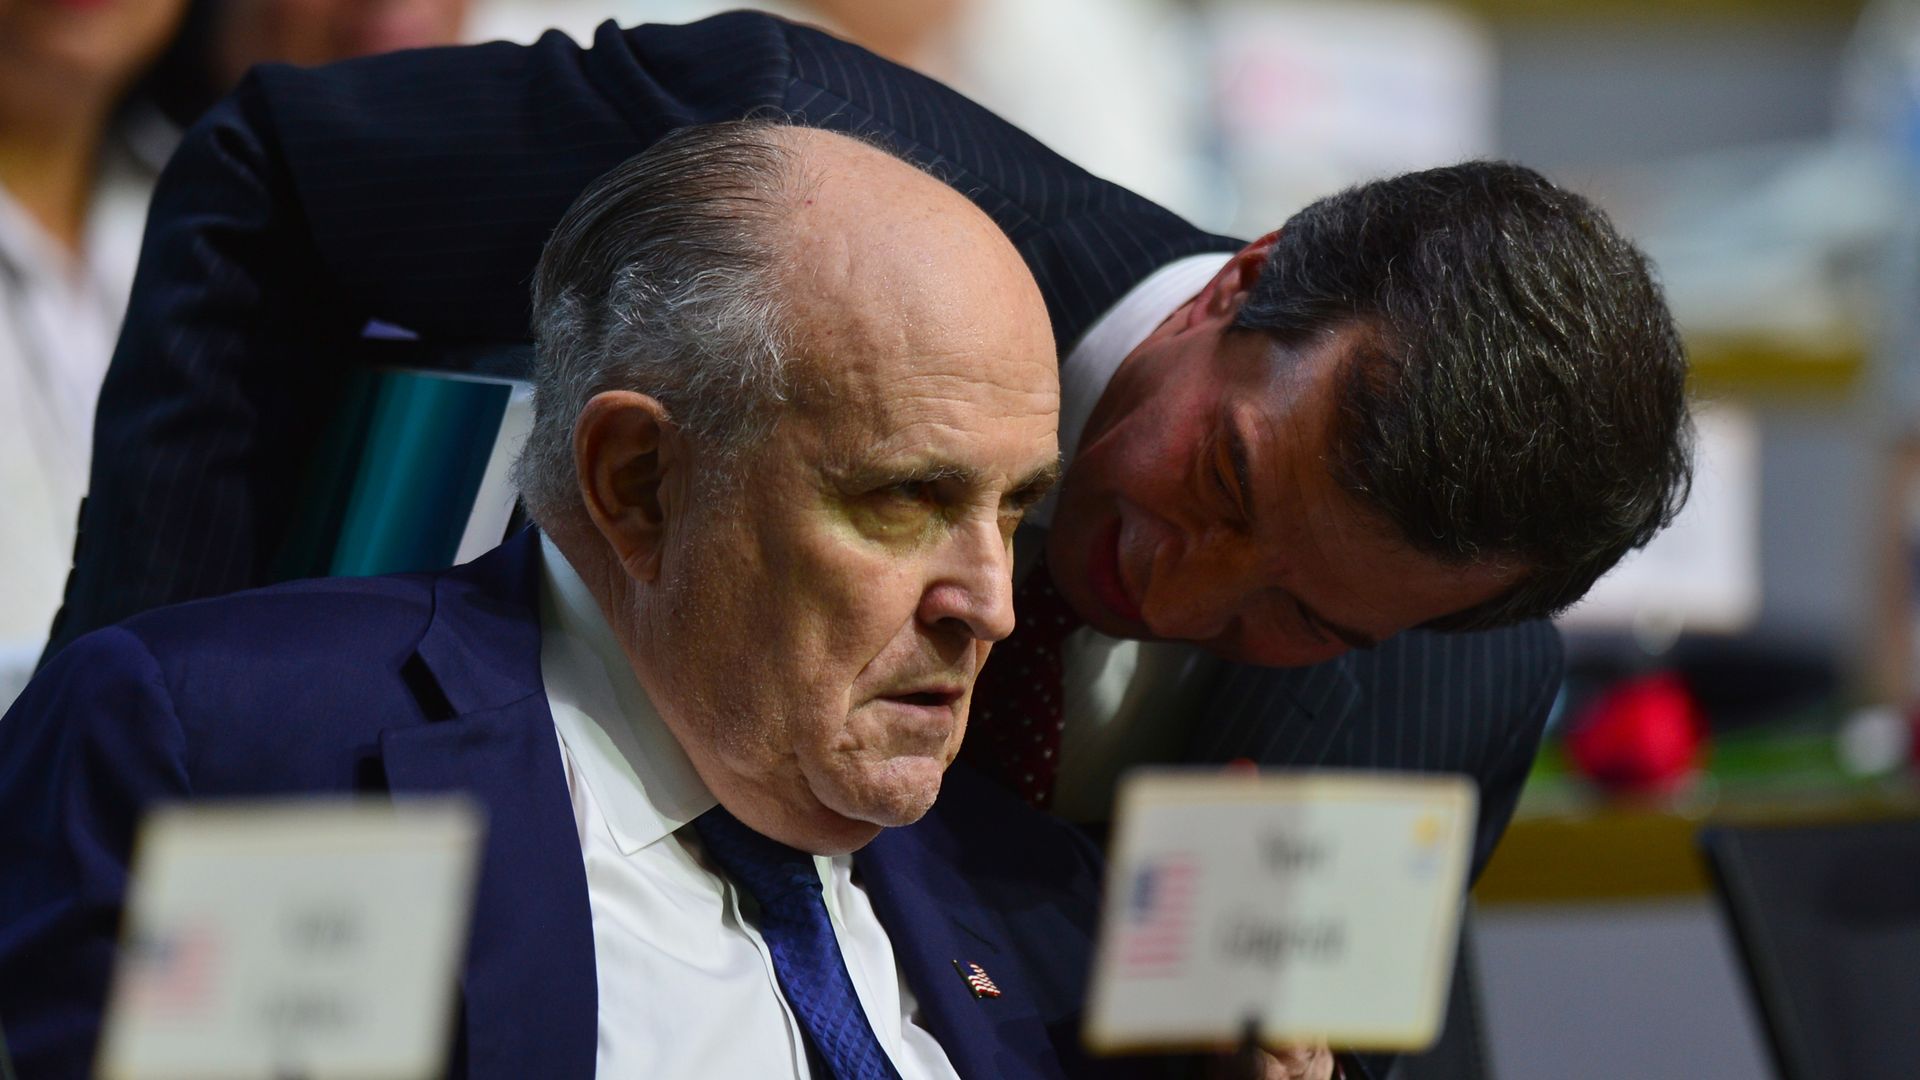 An aide whispering in Rudy Giuliani's ear